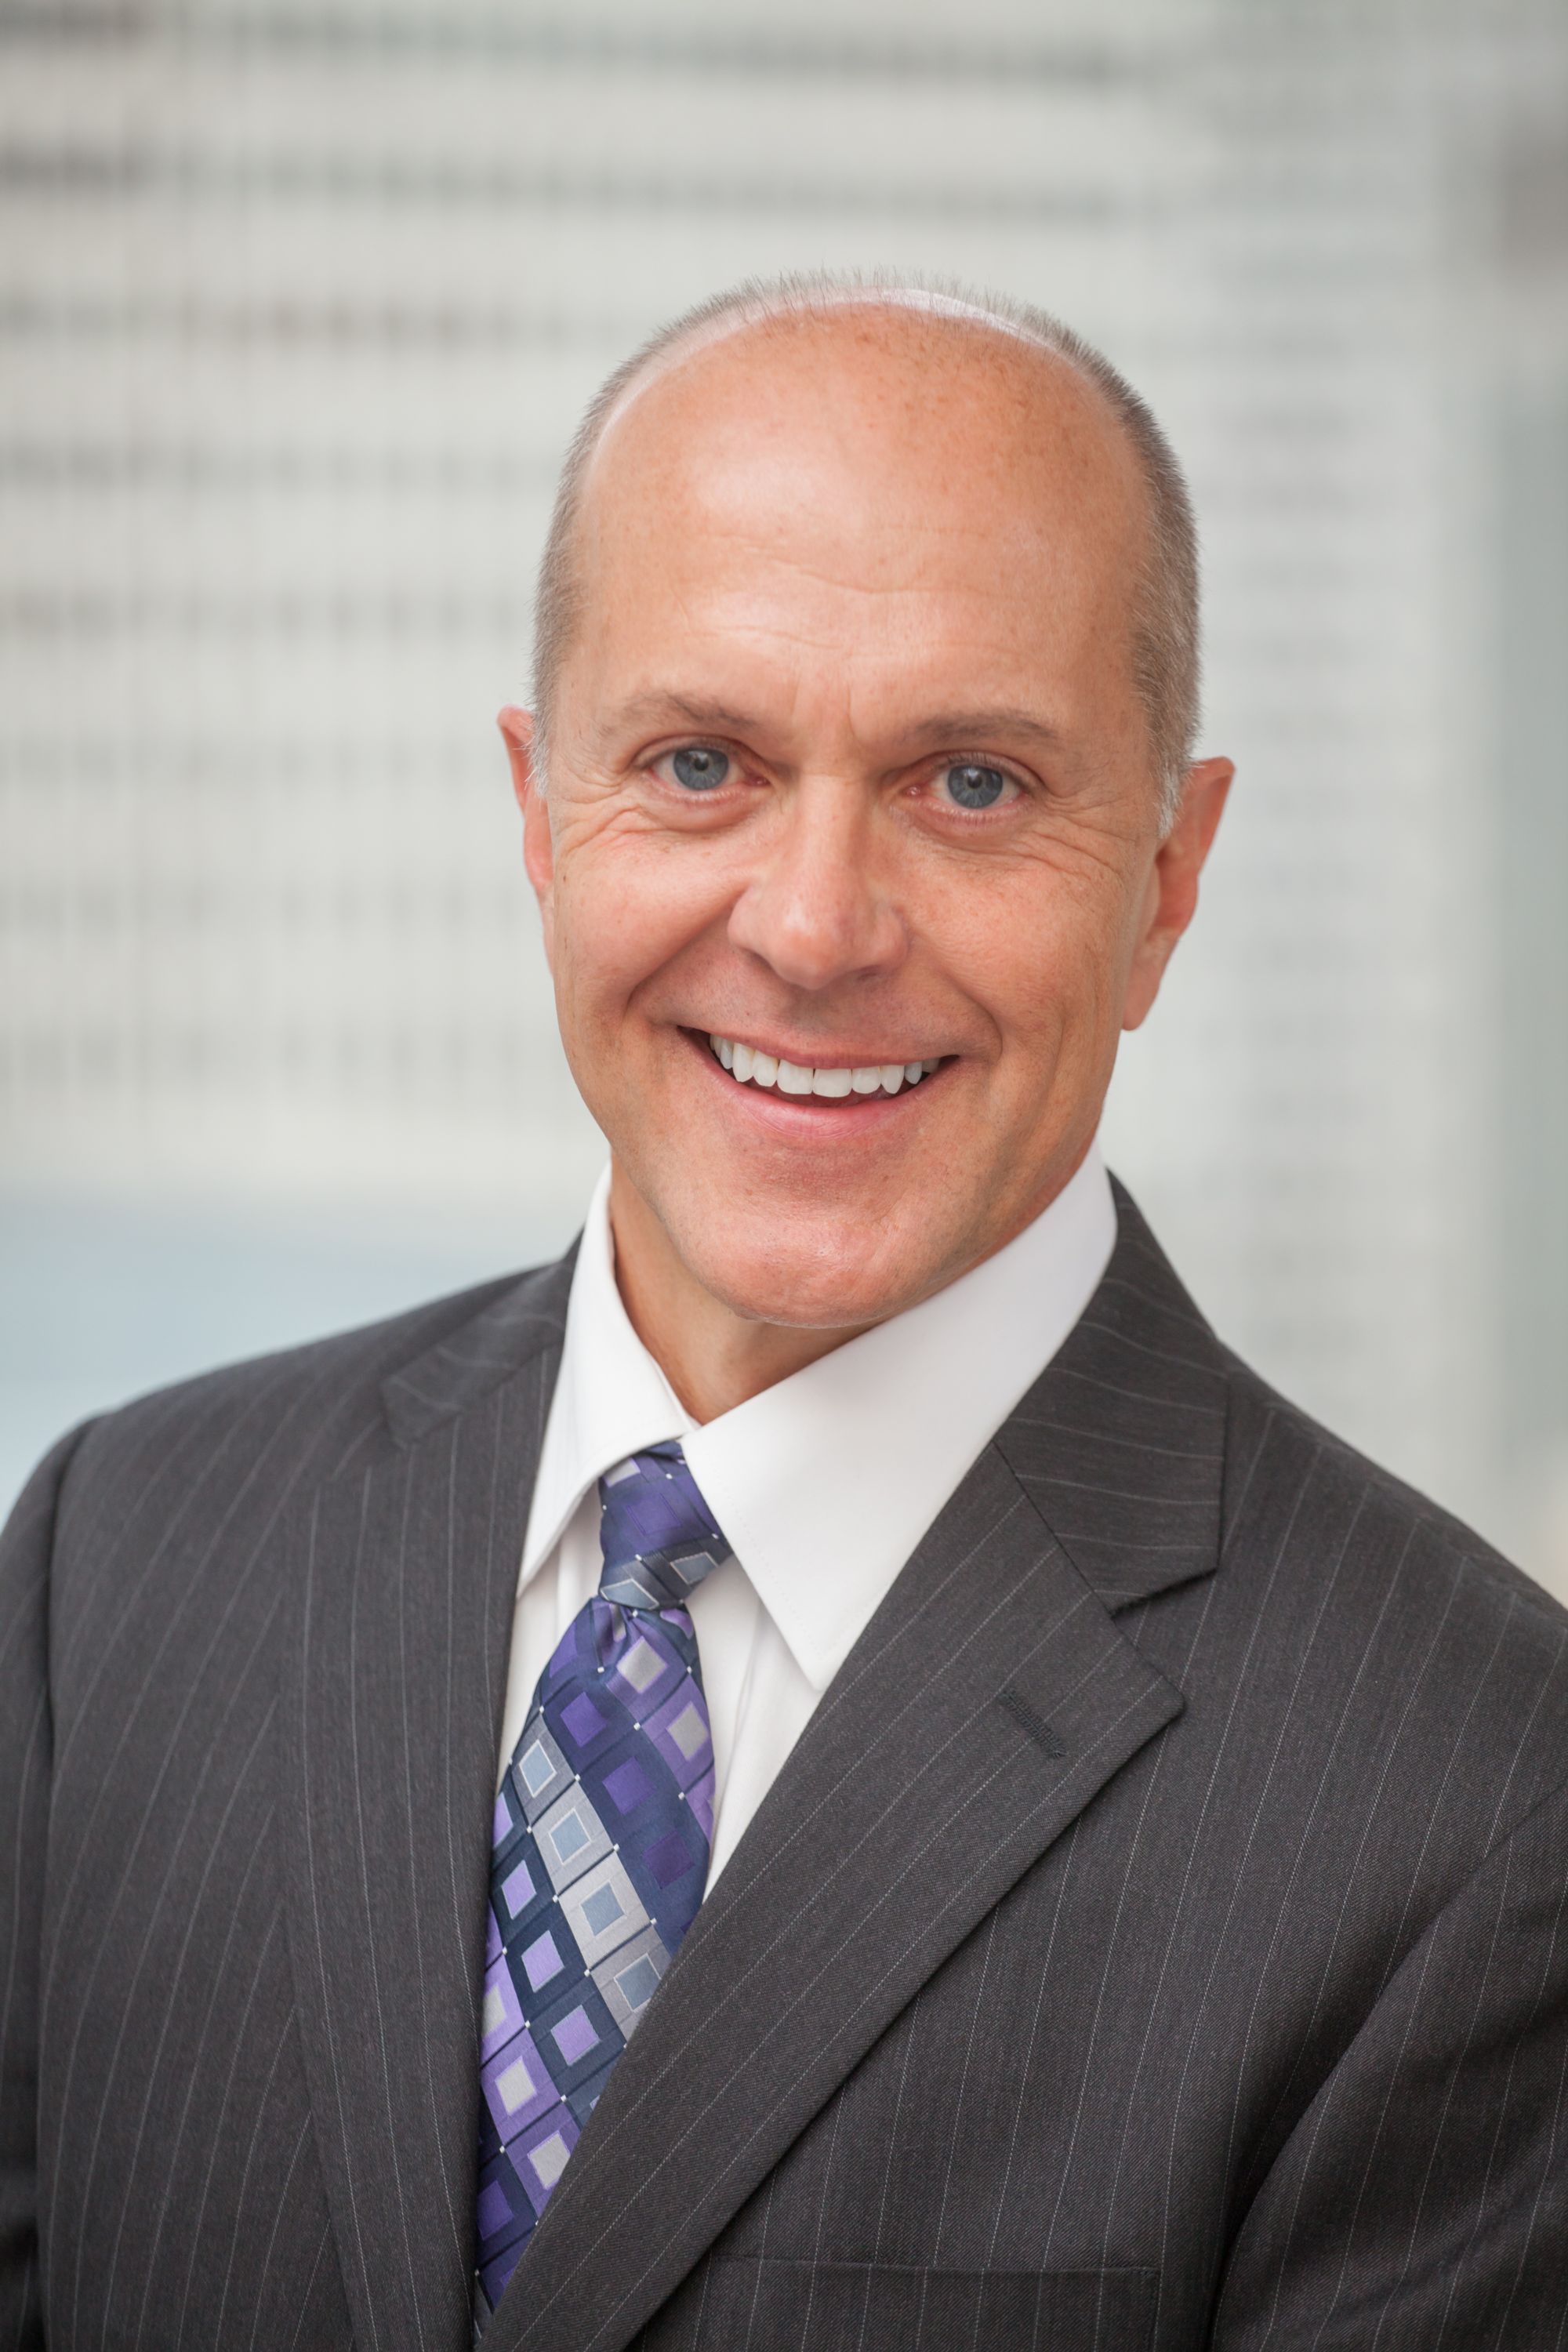 President and CEO of Chromaflo Technologies Corp. Scott Becker